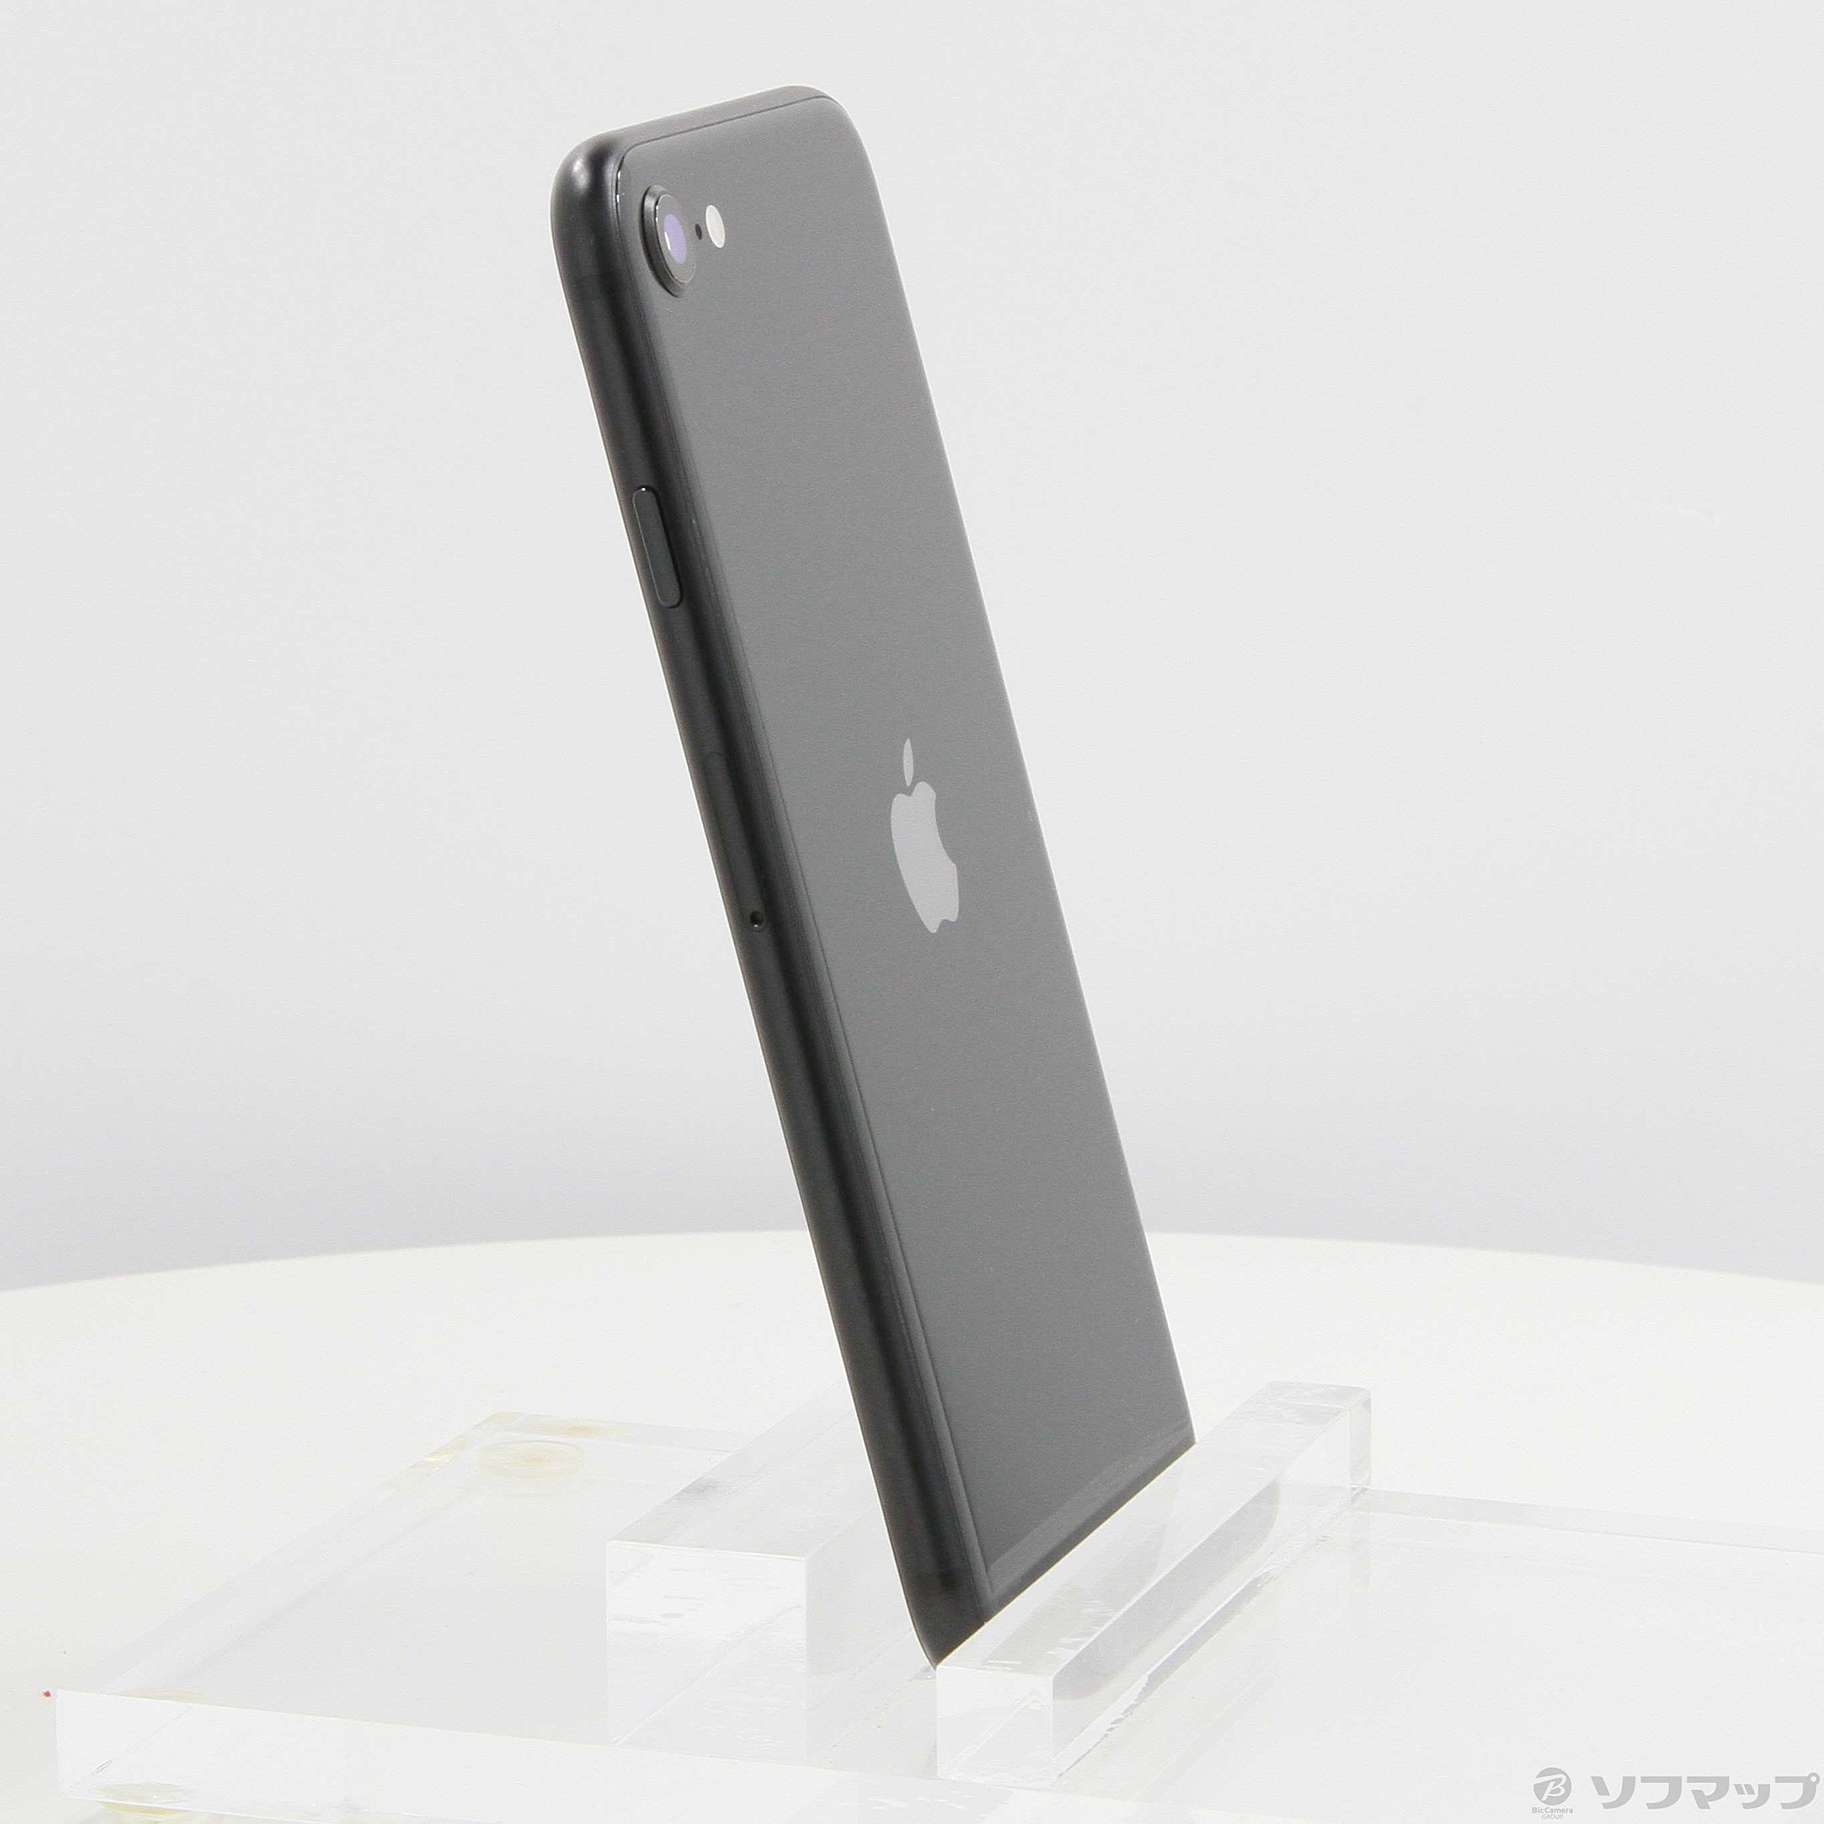 au 【SIMロックなし】MXD02J/A iPhone SE(第2世代) 128GB ブラック au-